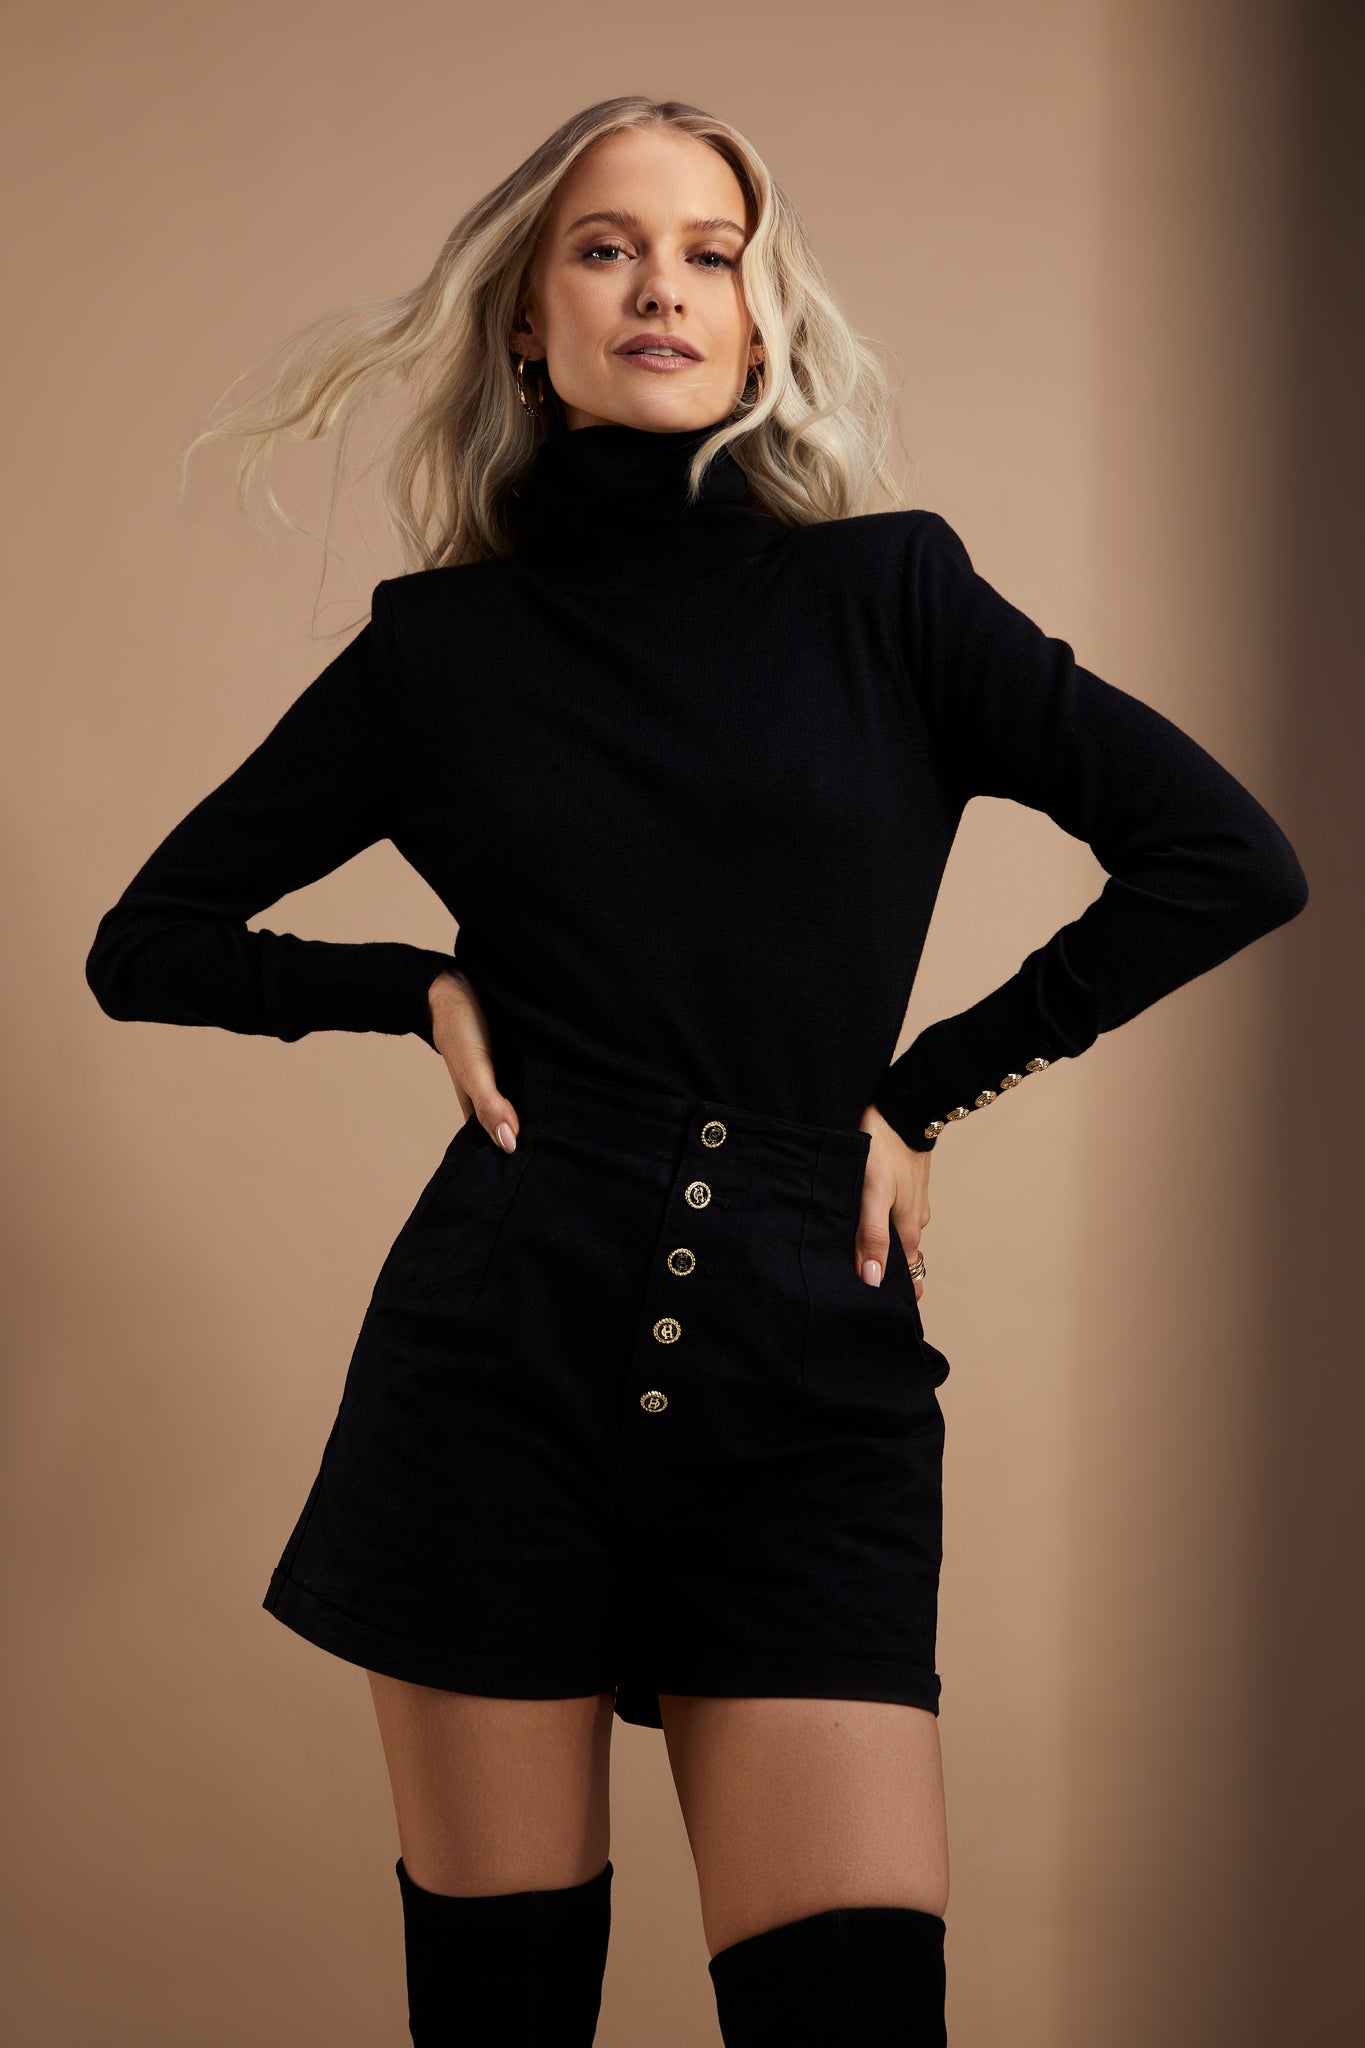 cashmere blend lightweight Roll neck knit in black with shoulder pads 